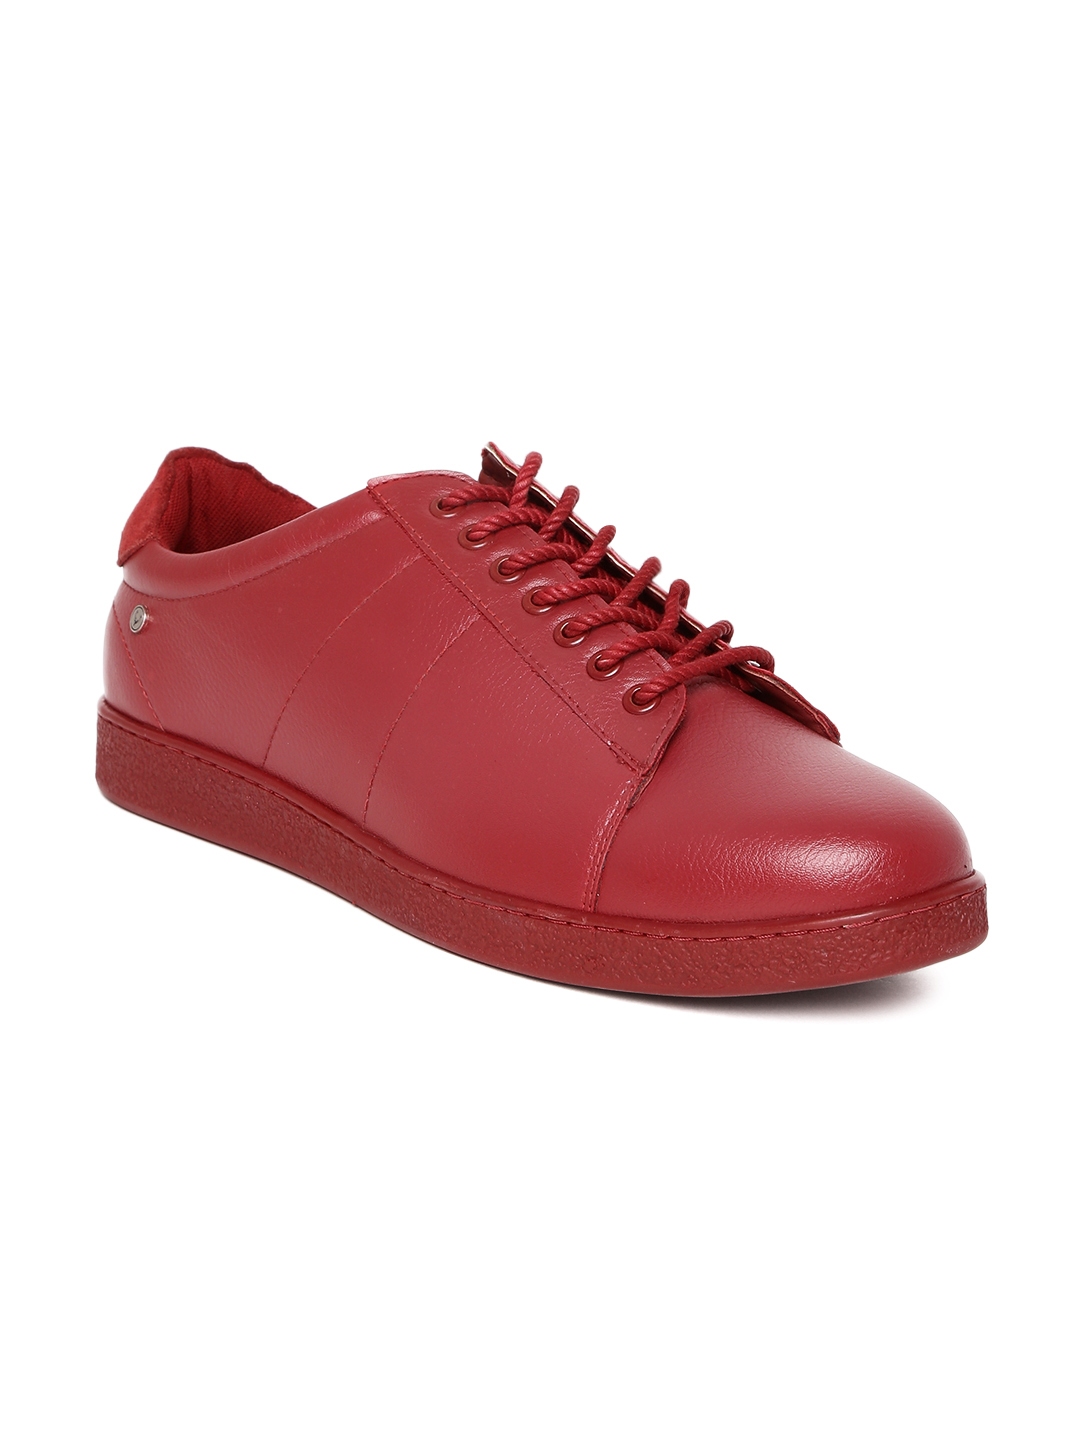 Buy Allen Solly Men Red Sneakers - Casual Shoes for Men 2167908 | Myntra